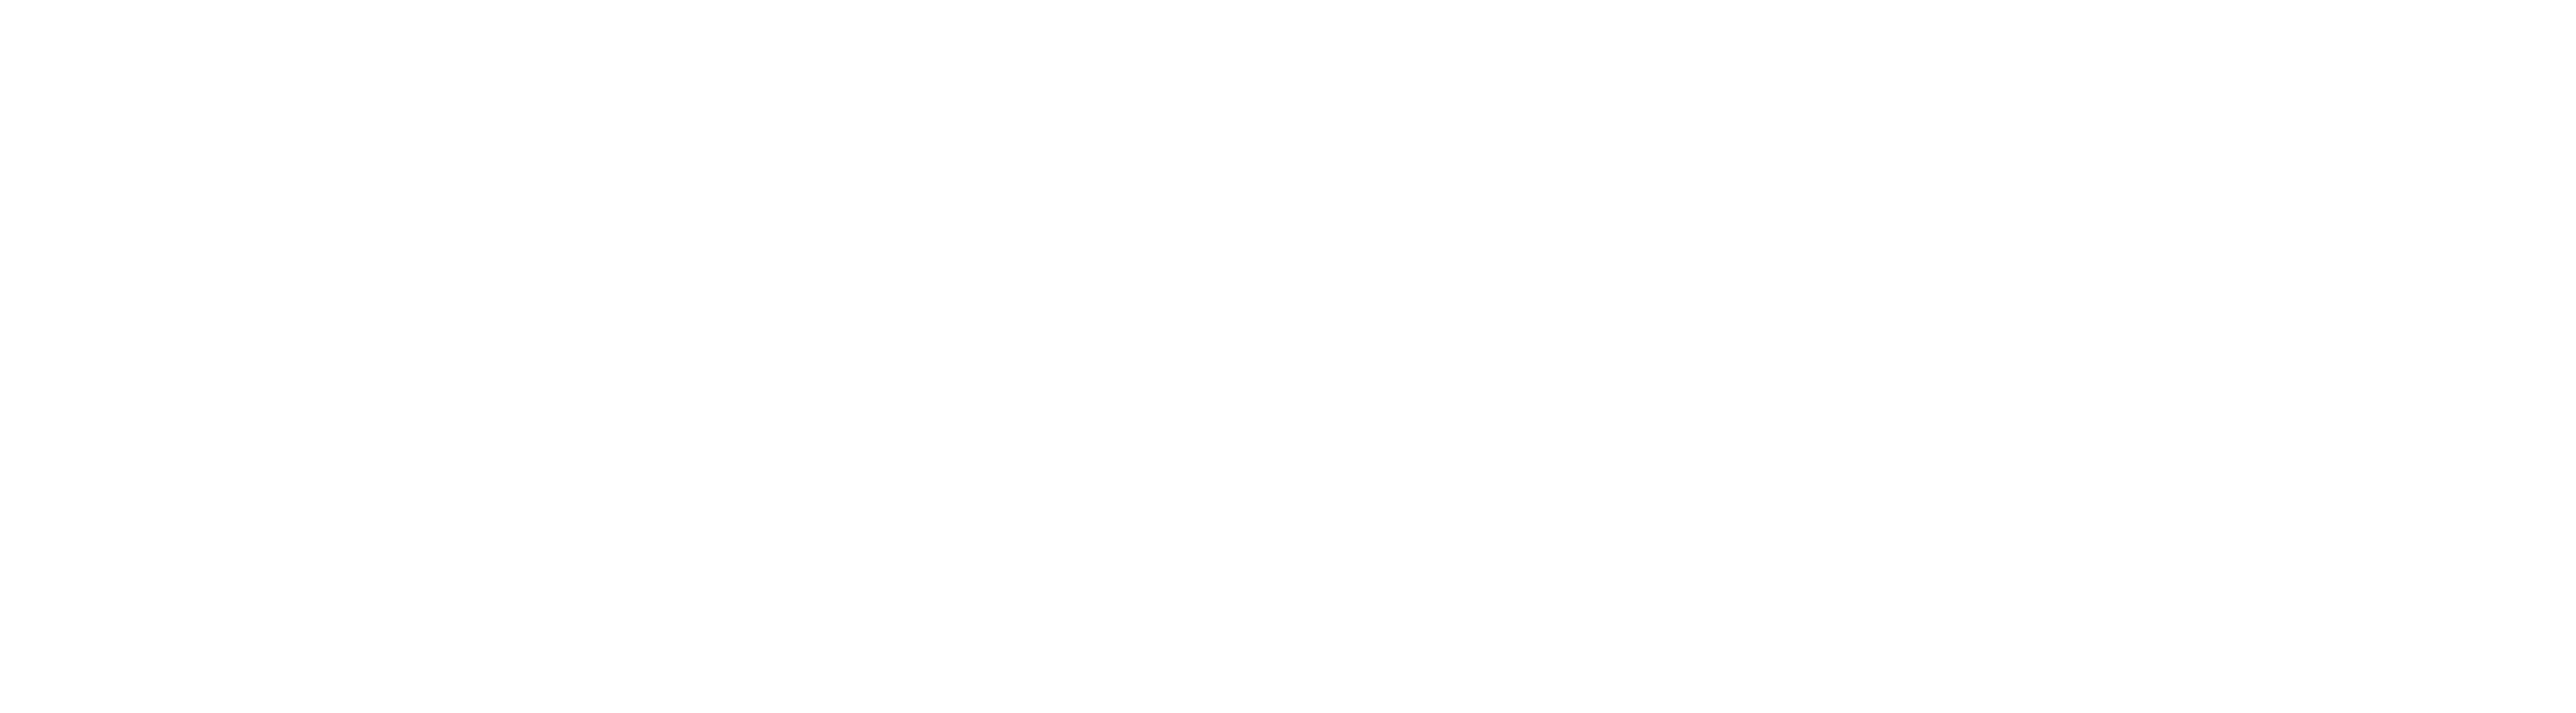 Legito PowerUp 2023 logo